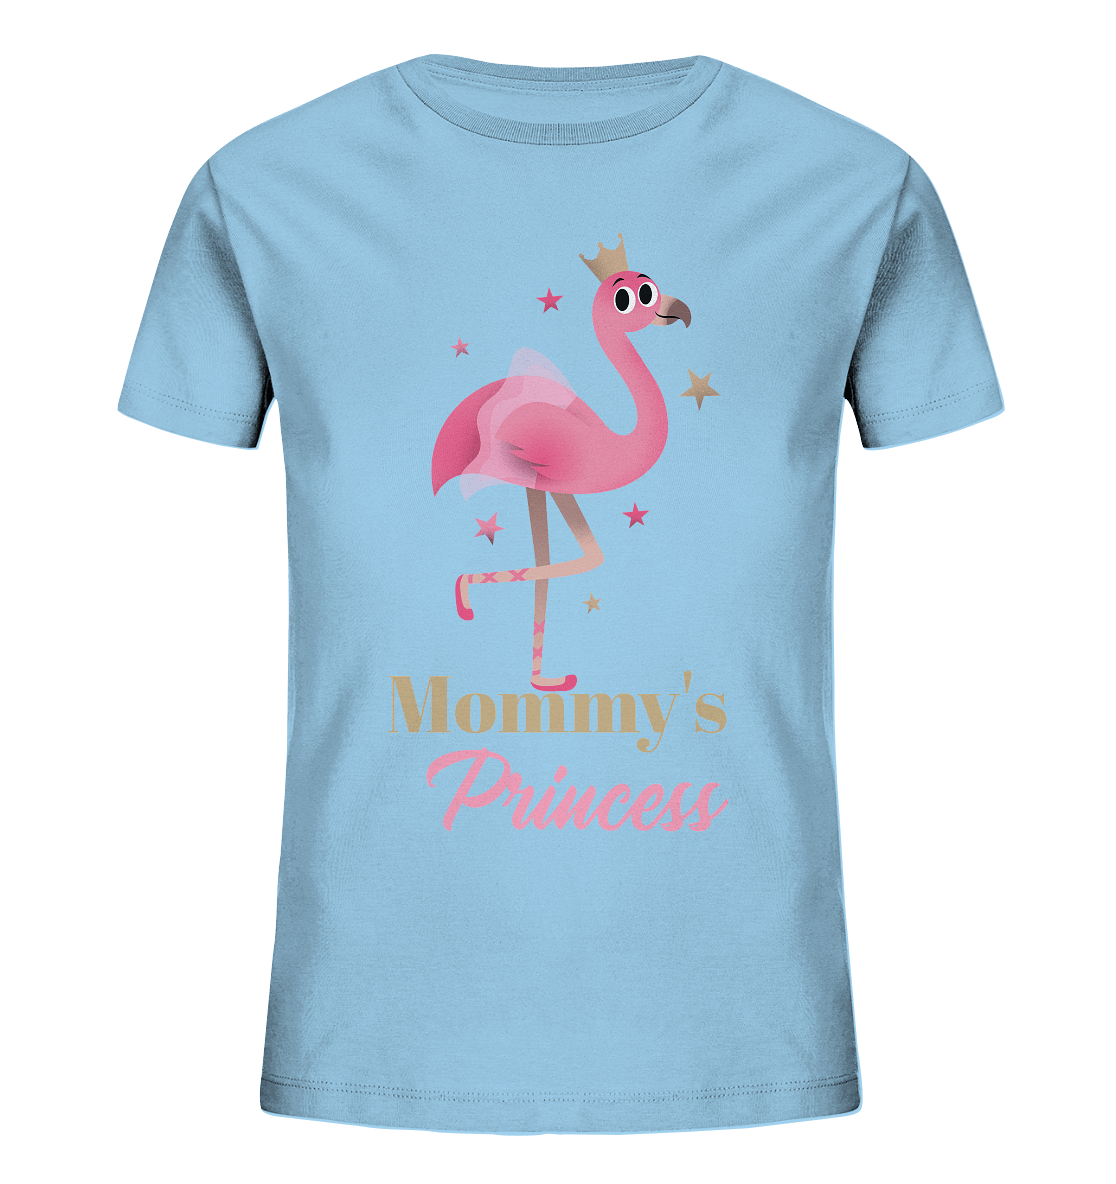 Kinder T-Shirt "Mommy's Princess"